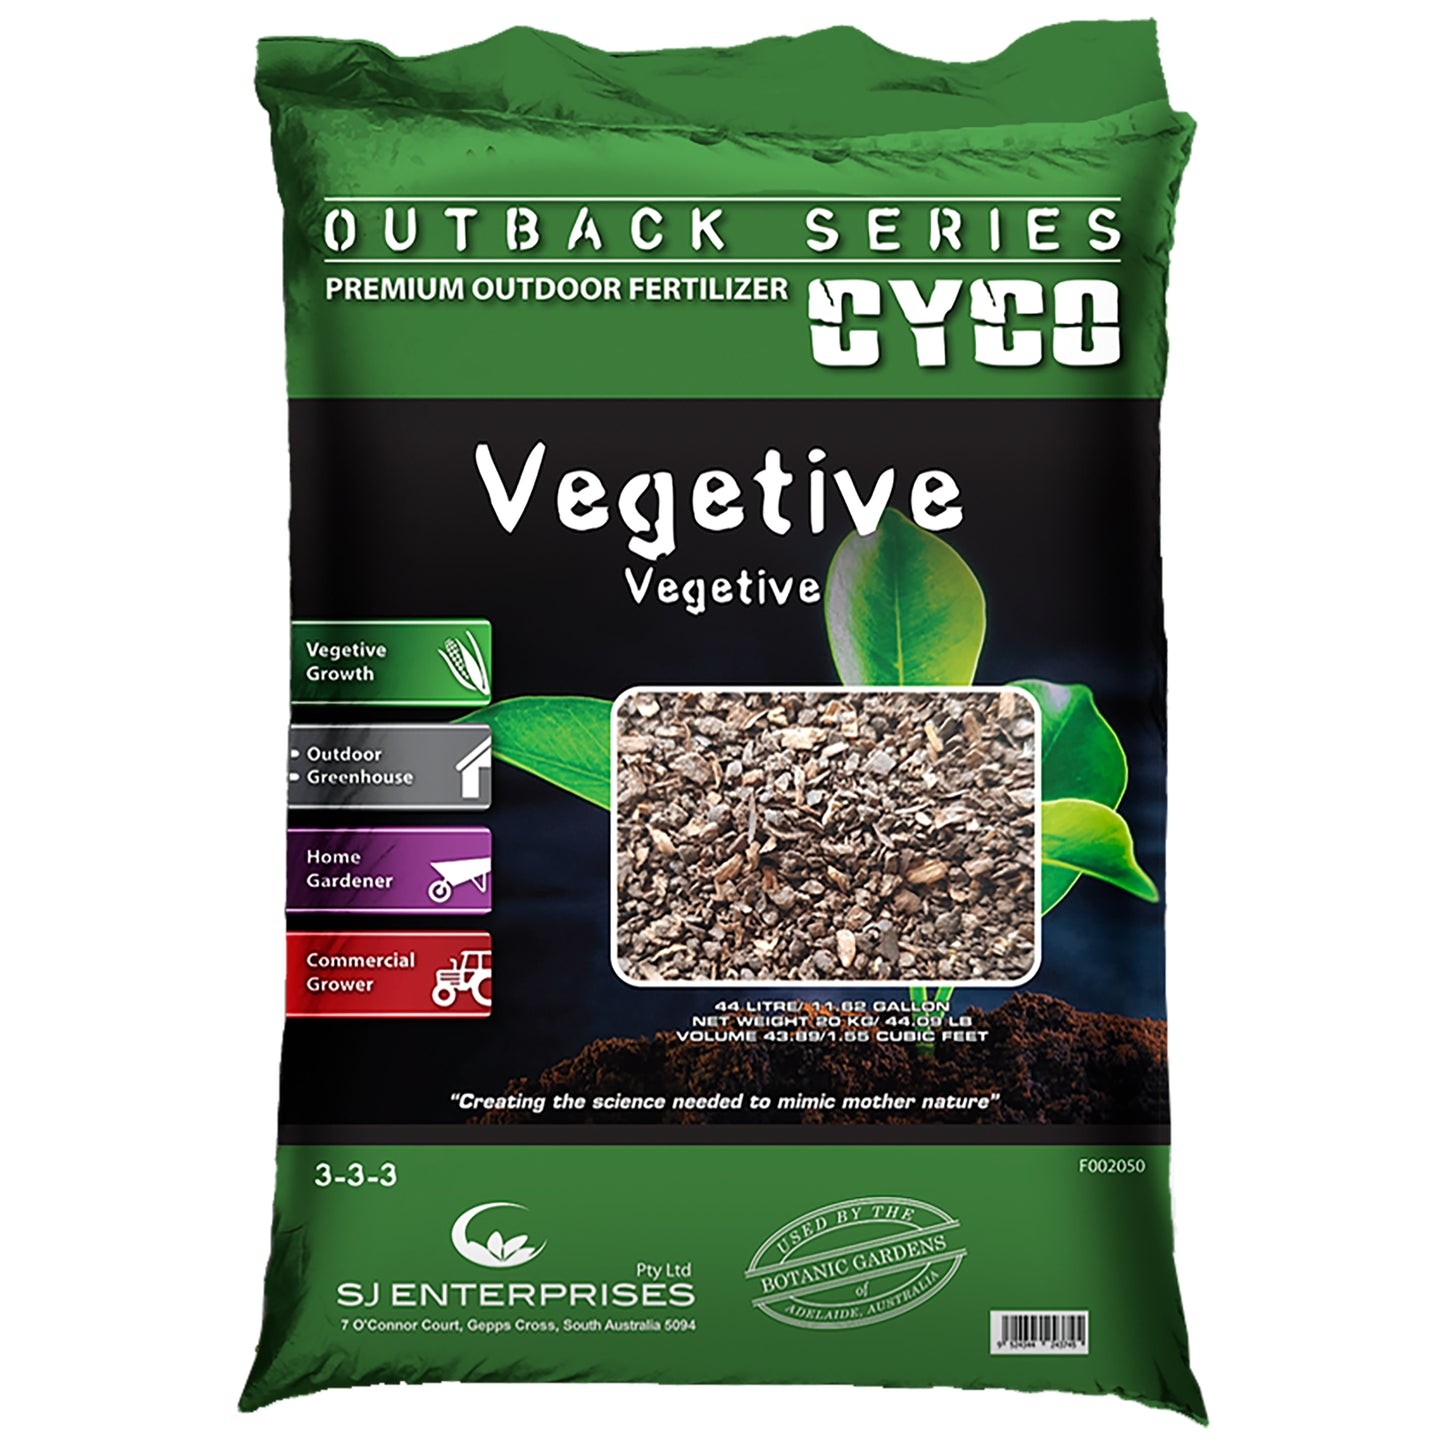 CYCO Outback Series Vegetive